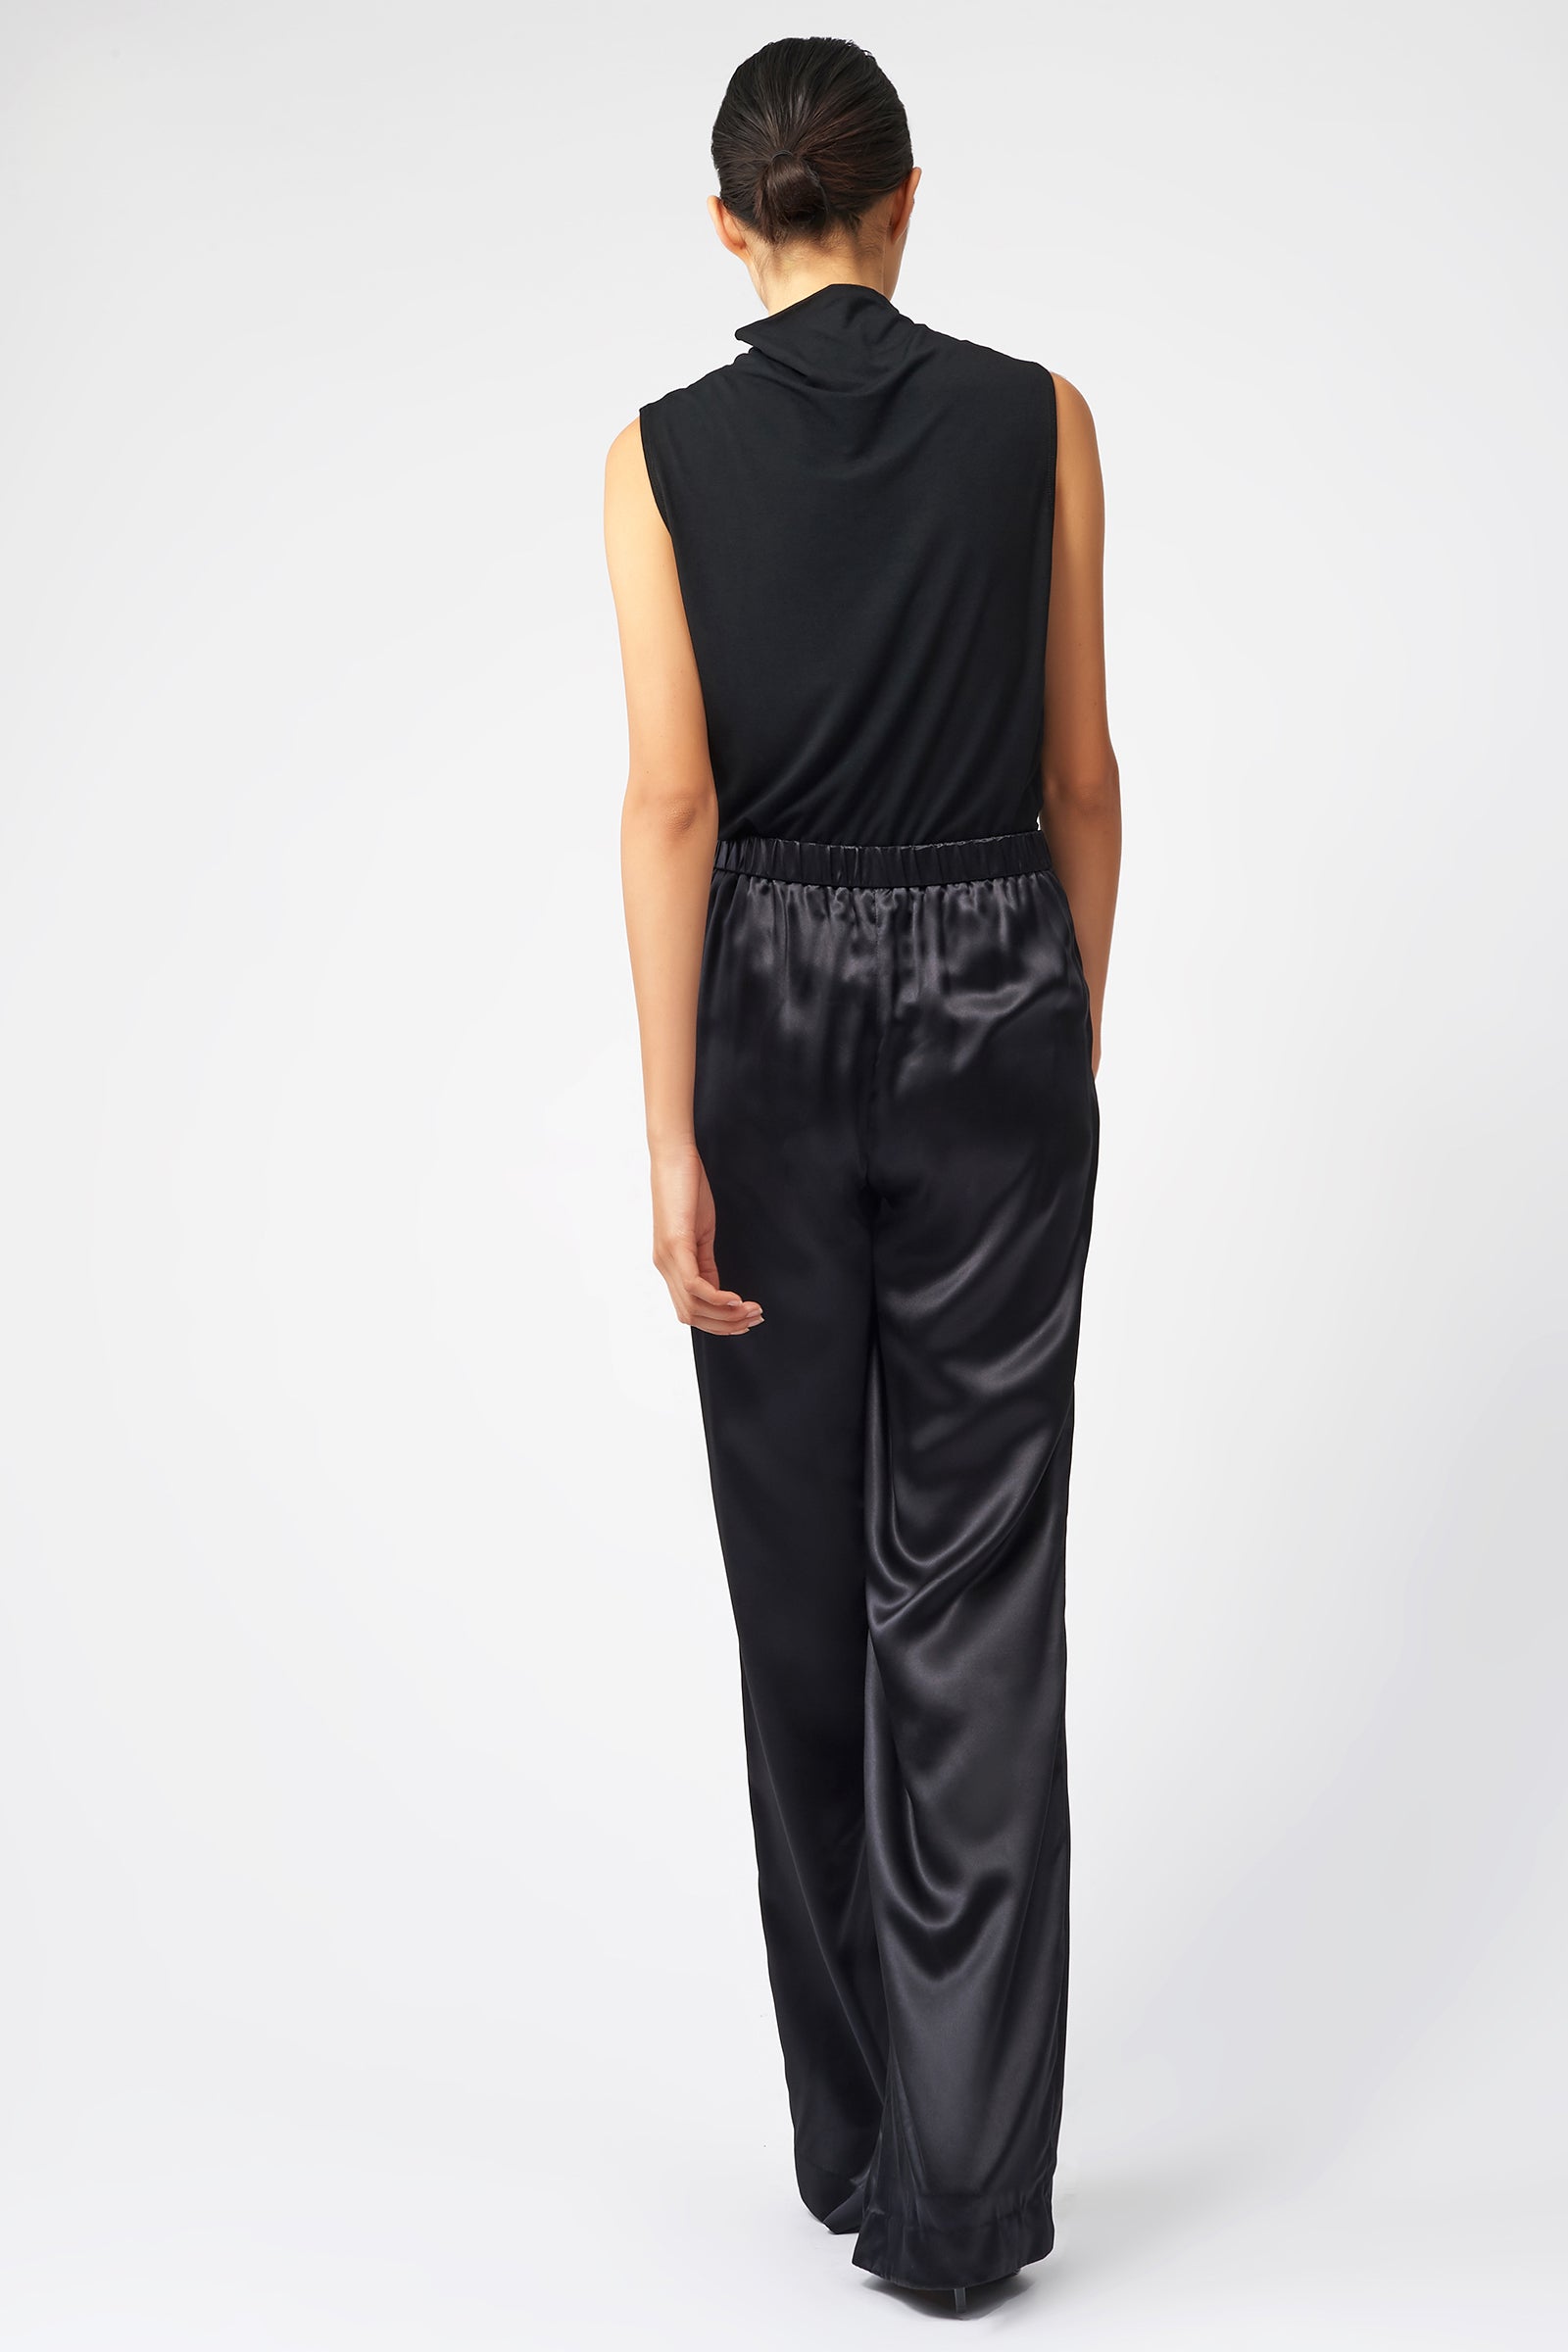 Kal Rieman Classic Silk Trouser in Black on Model Full Front View